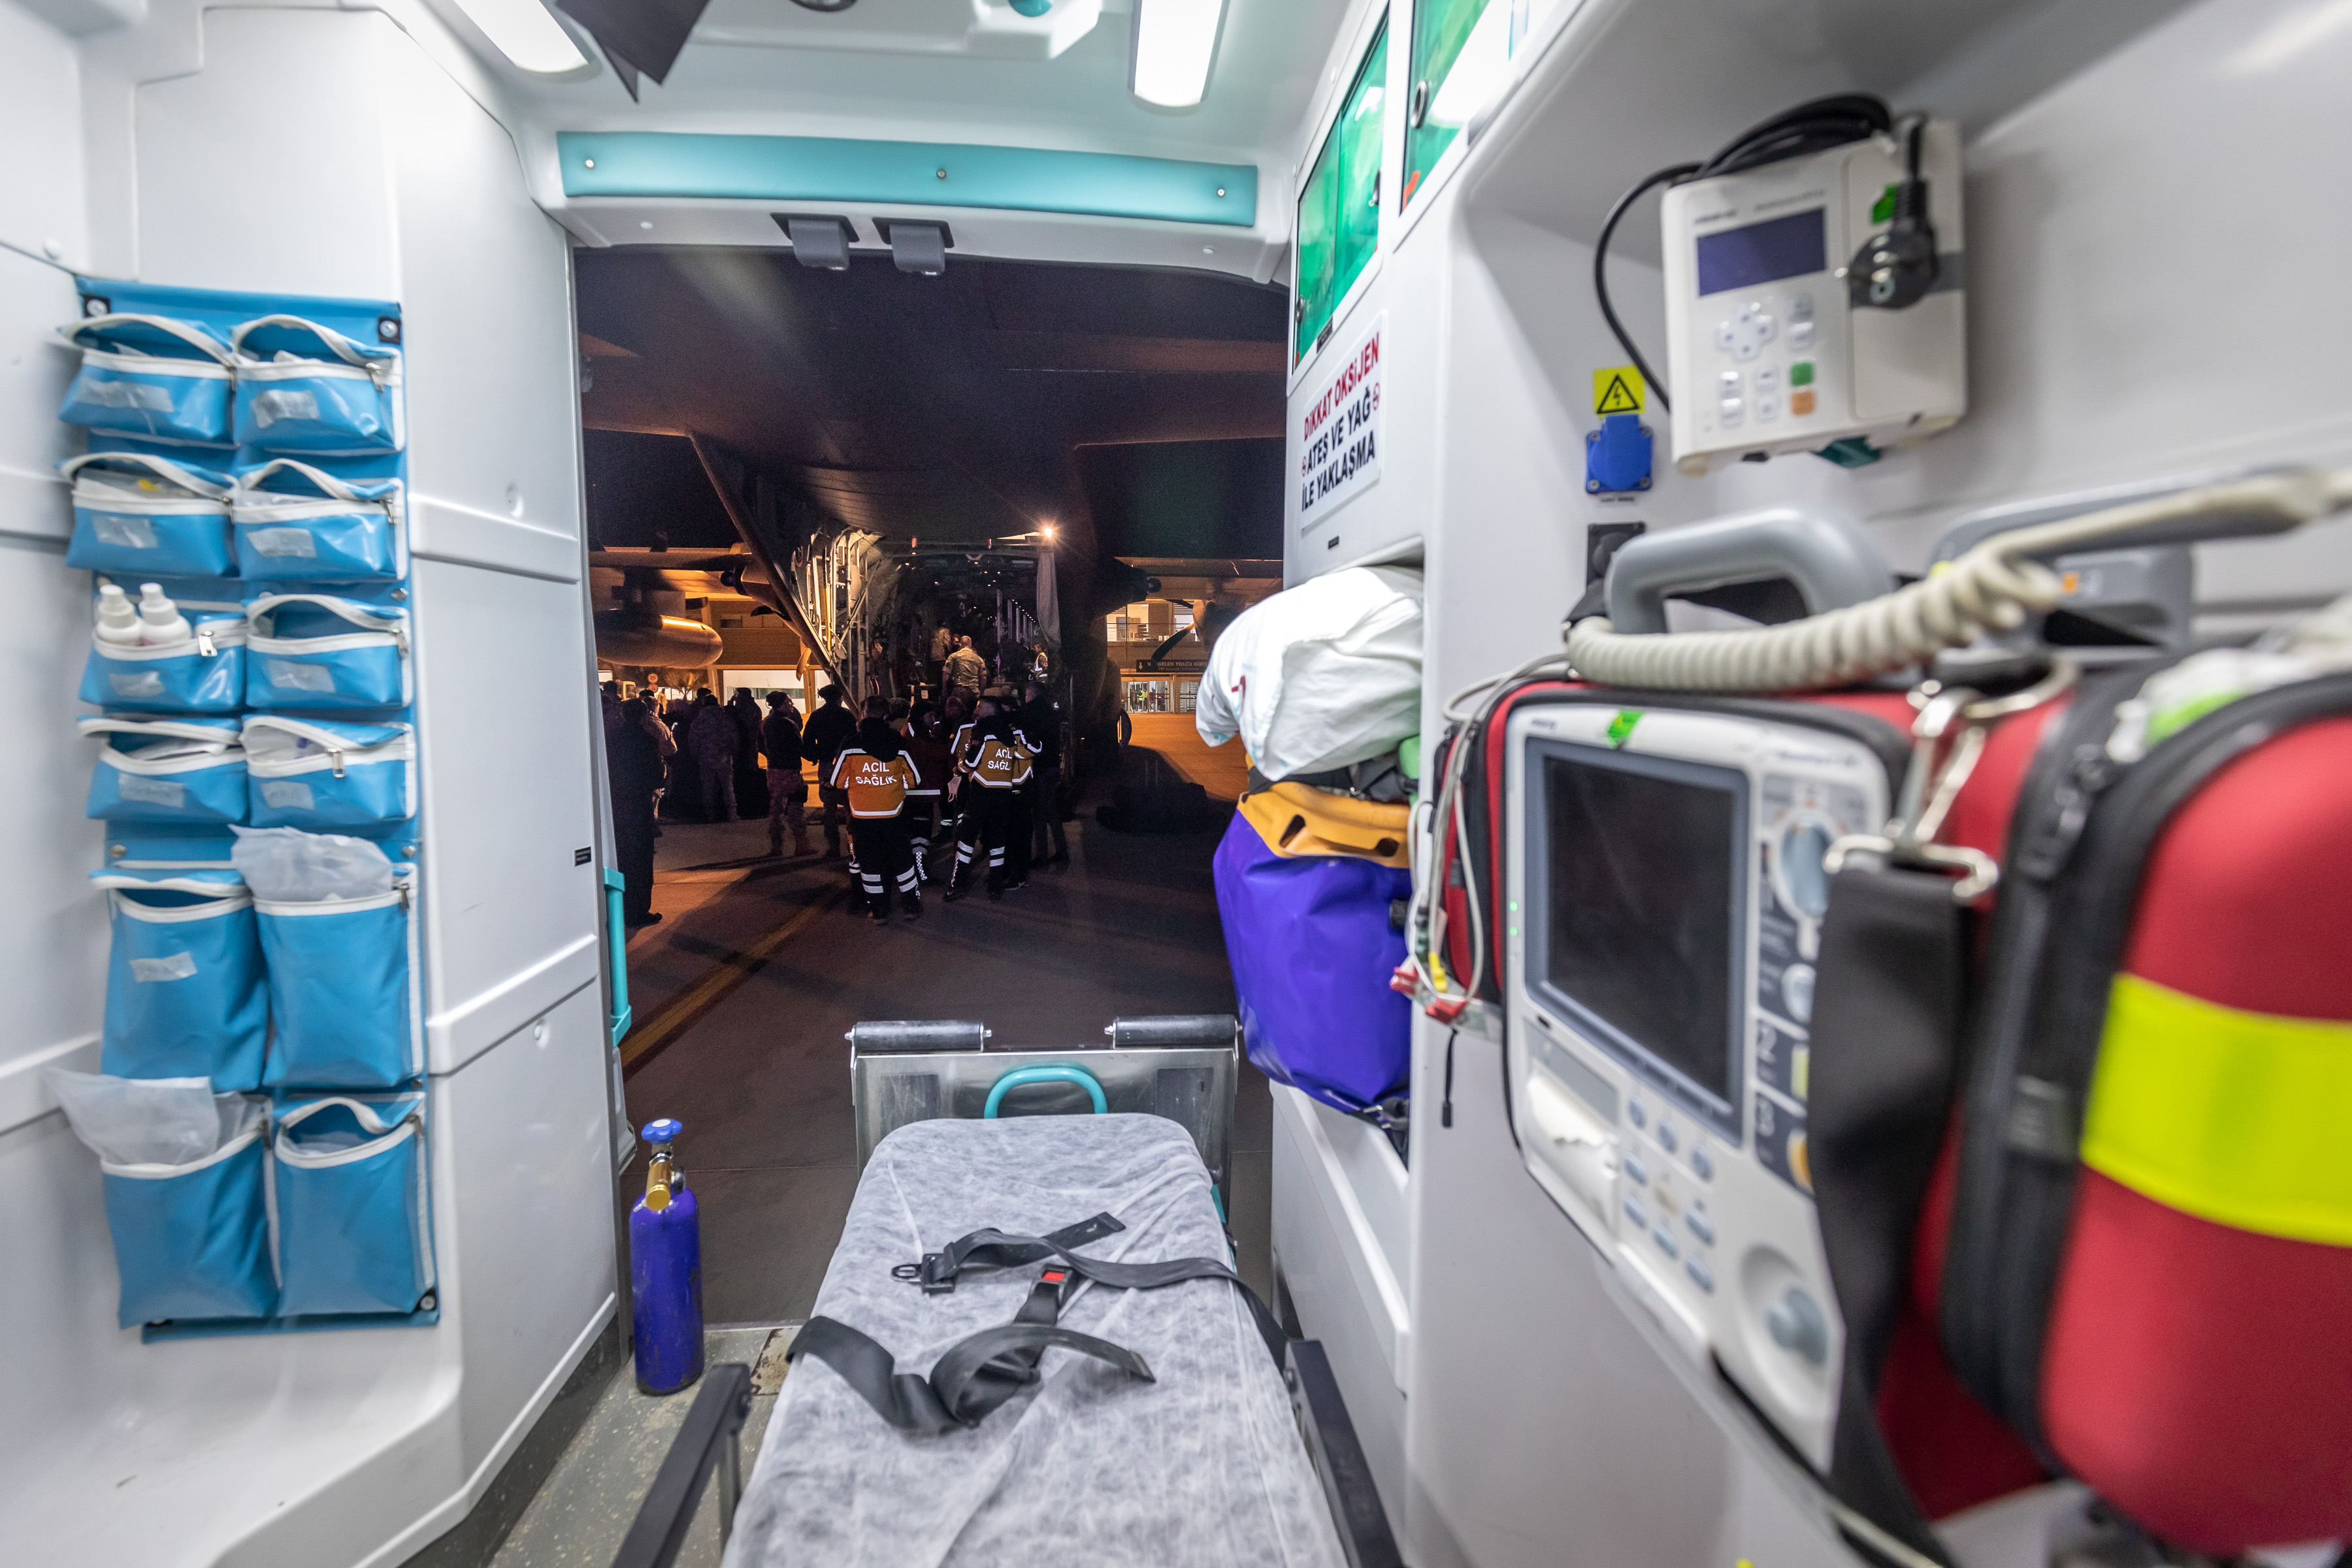 Image shows medical equipment inside an ambulance.es aircraft.